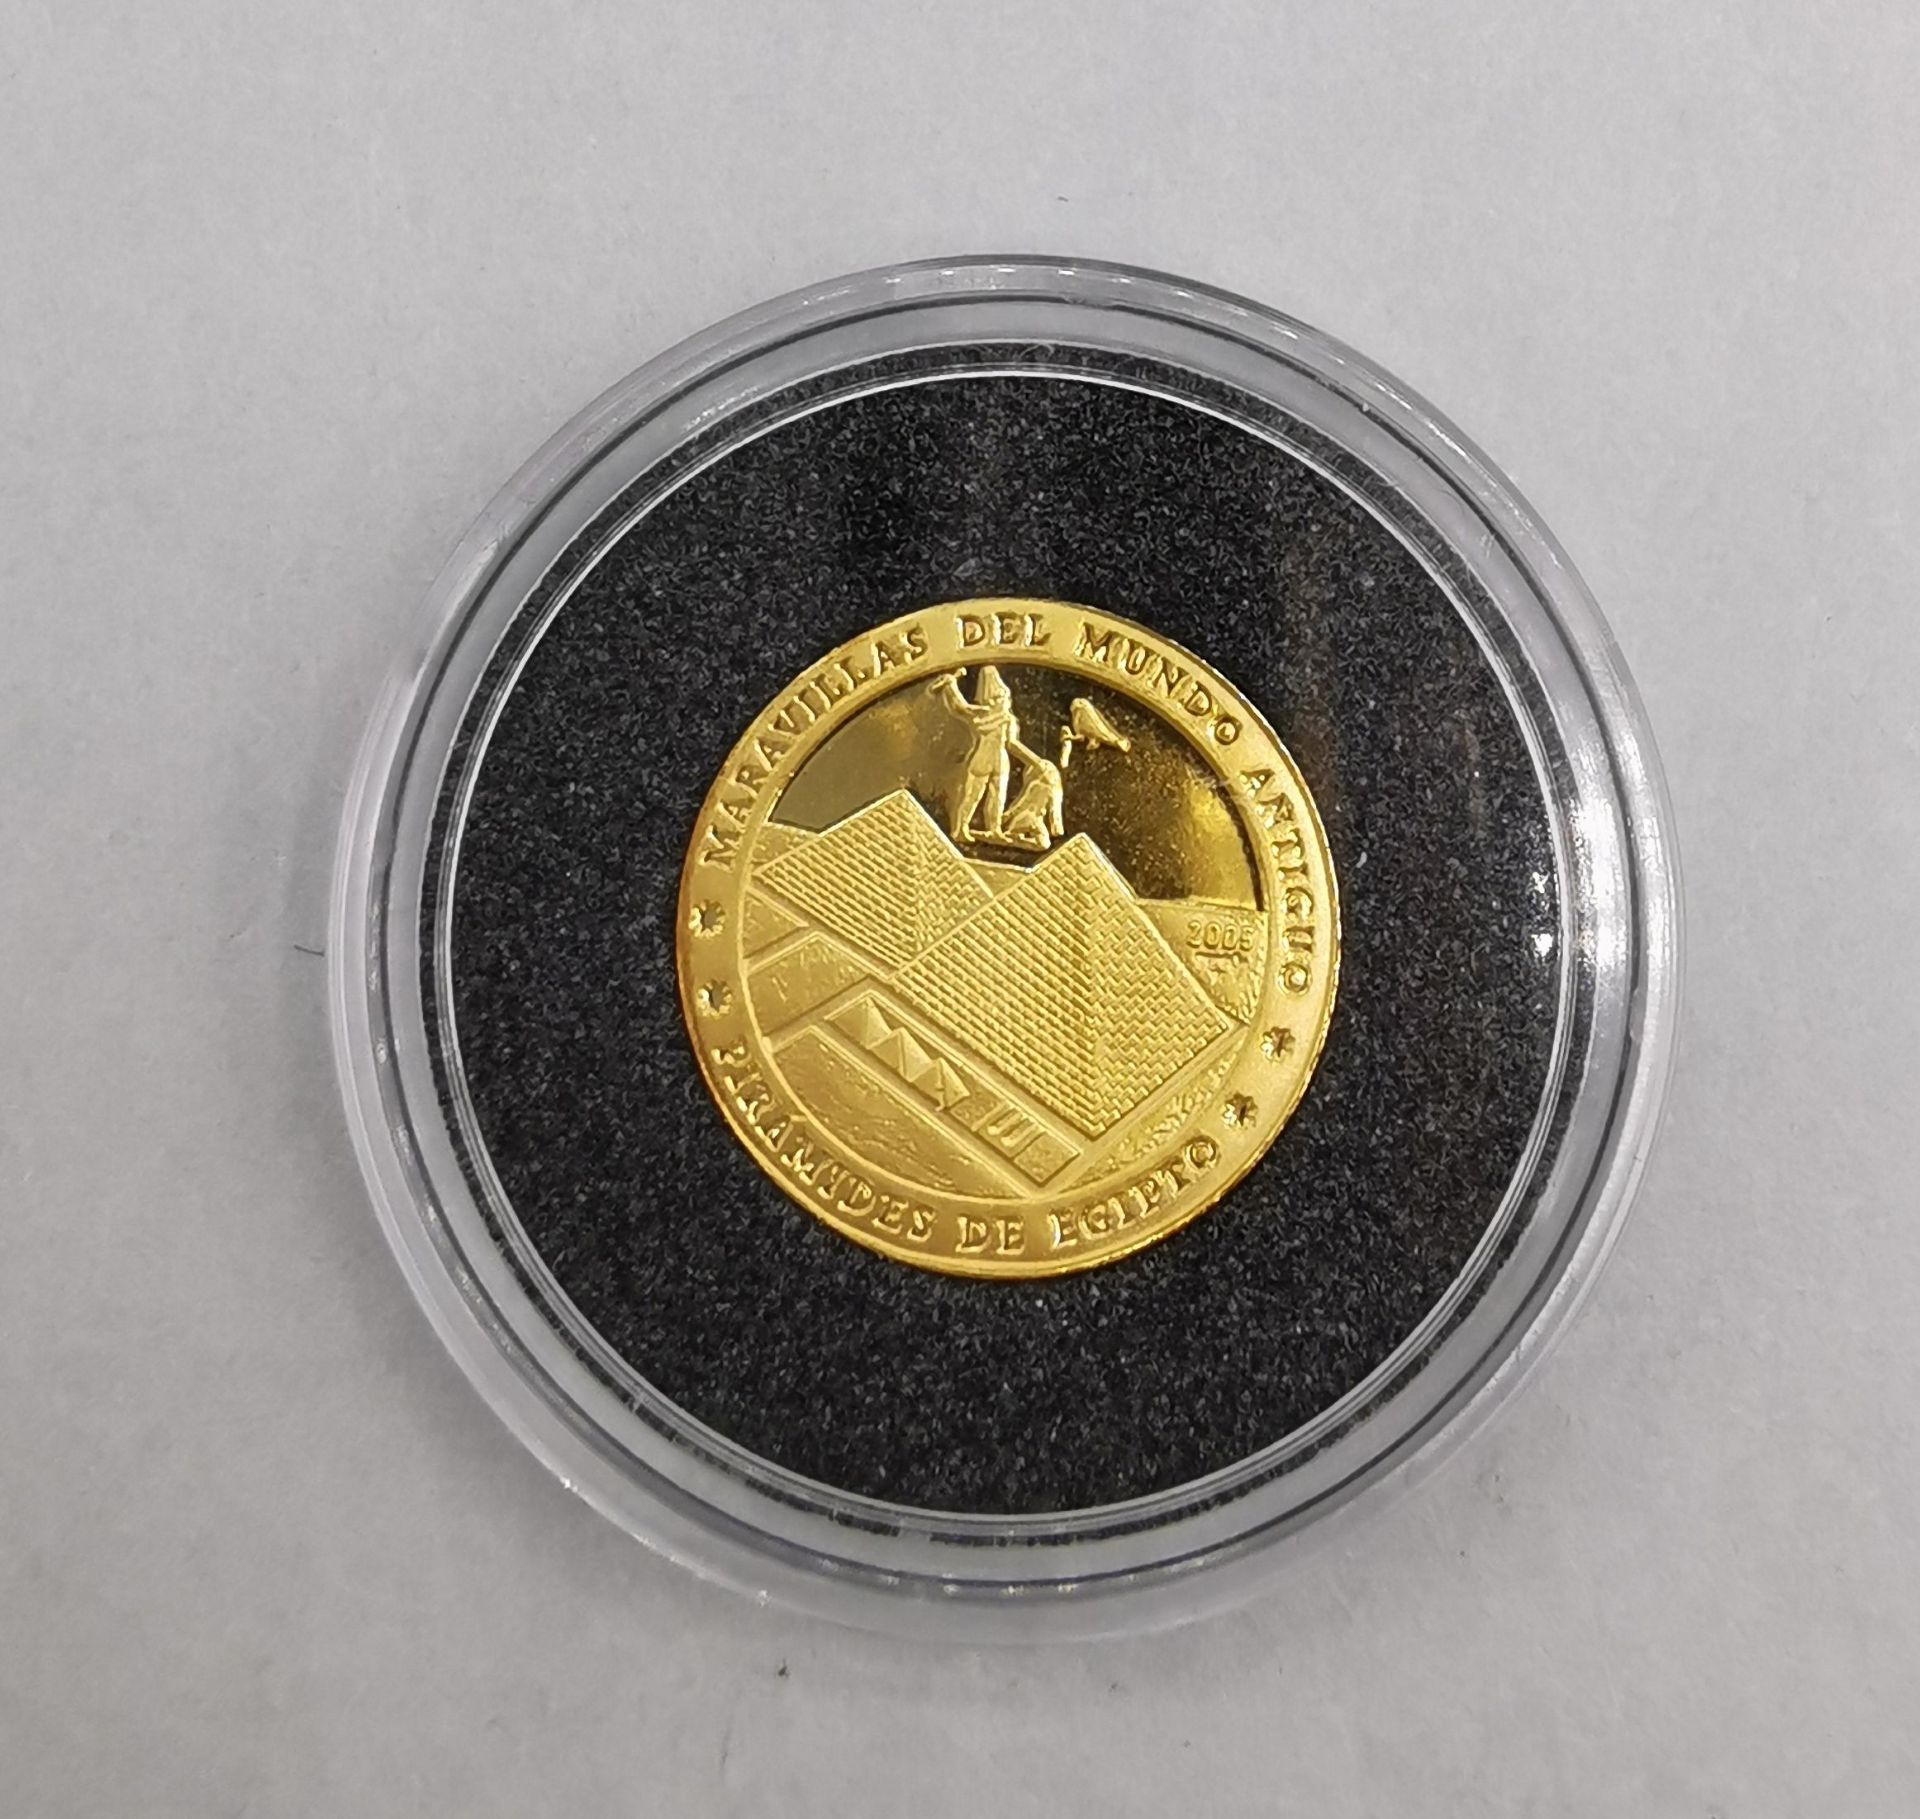 GOLD COIN - 5 PESOS - Image 2 of 2